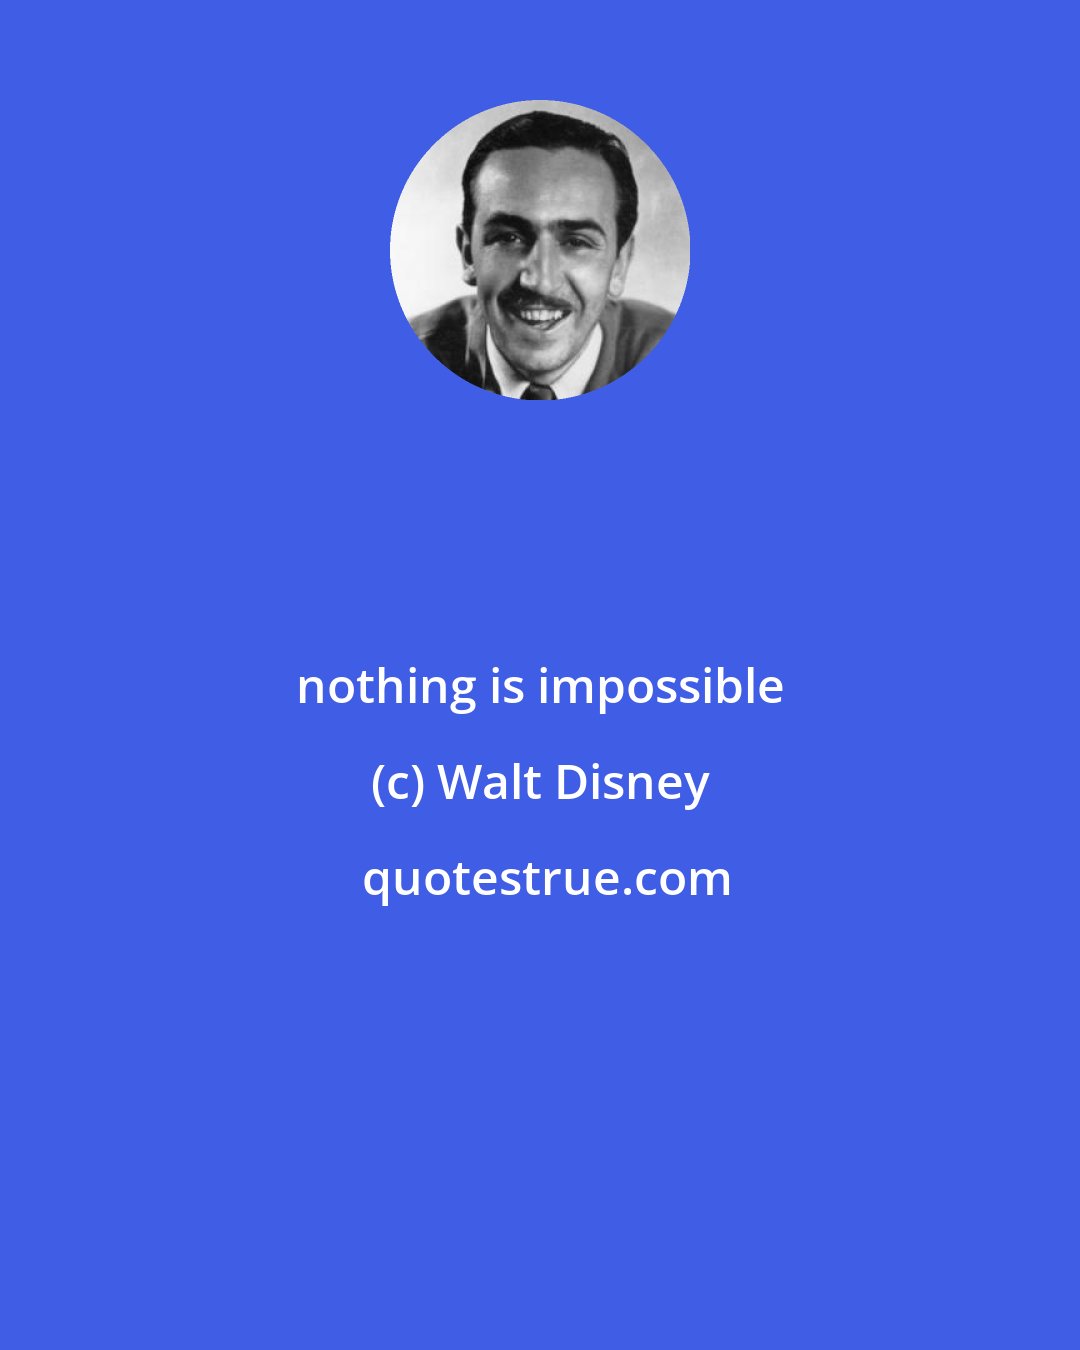 Walt Disney: nothing is impossible